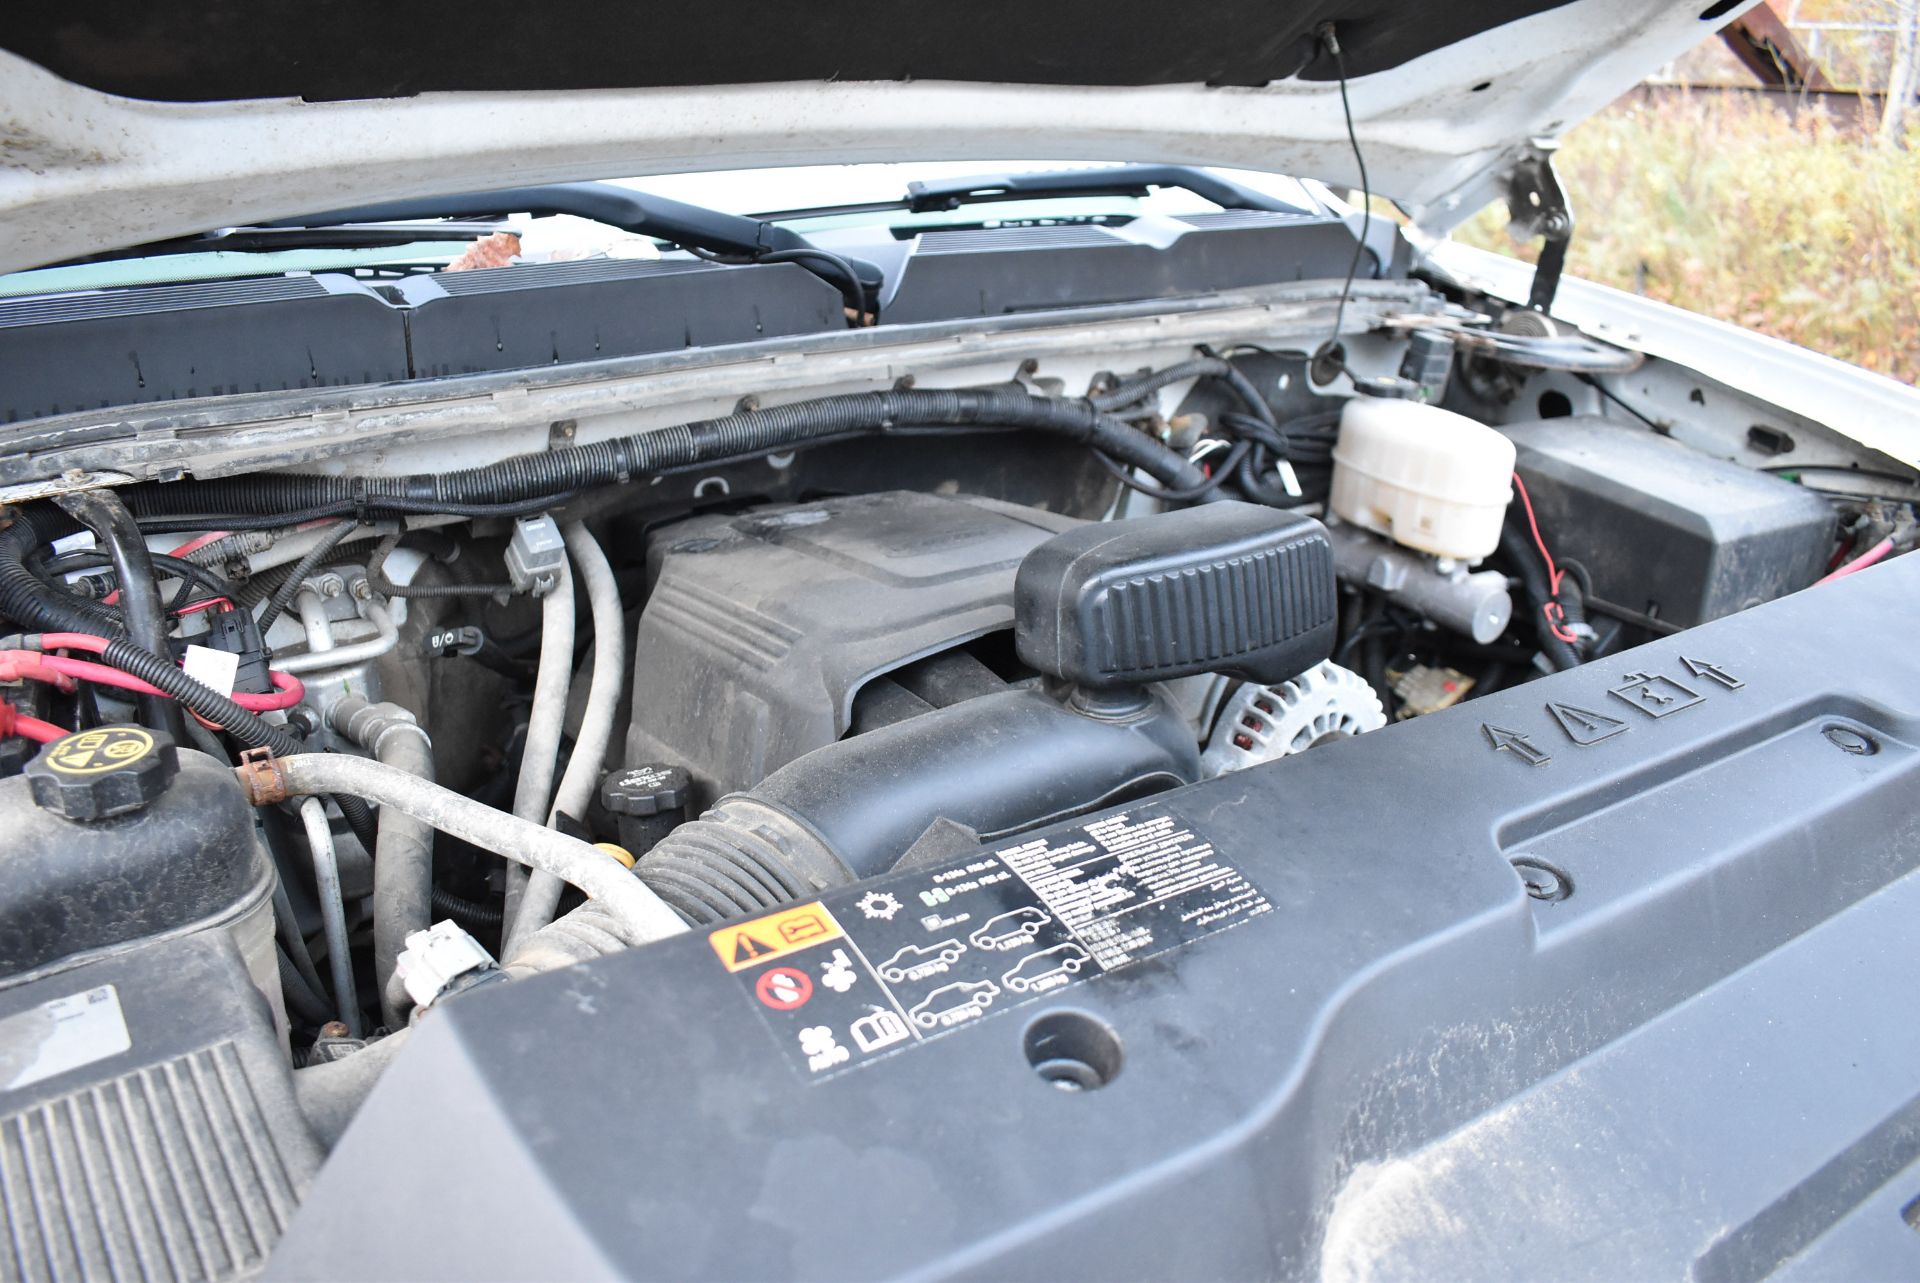 CHEVROLET (2014) SILVERADO 2500 CREW CAB PICKUP TRUCK WITH 6.0 L V8 GAS ENGINE, AUTO TRANSMISSION, - Image 13 of 26